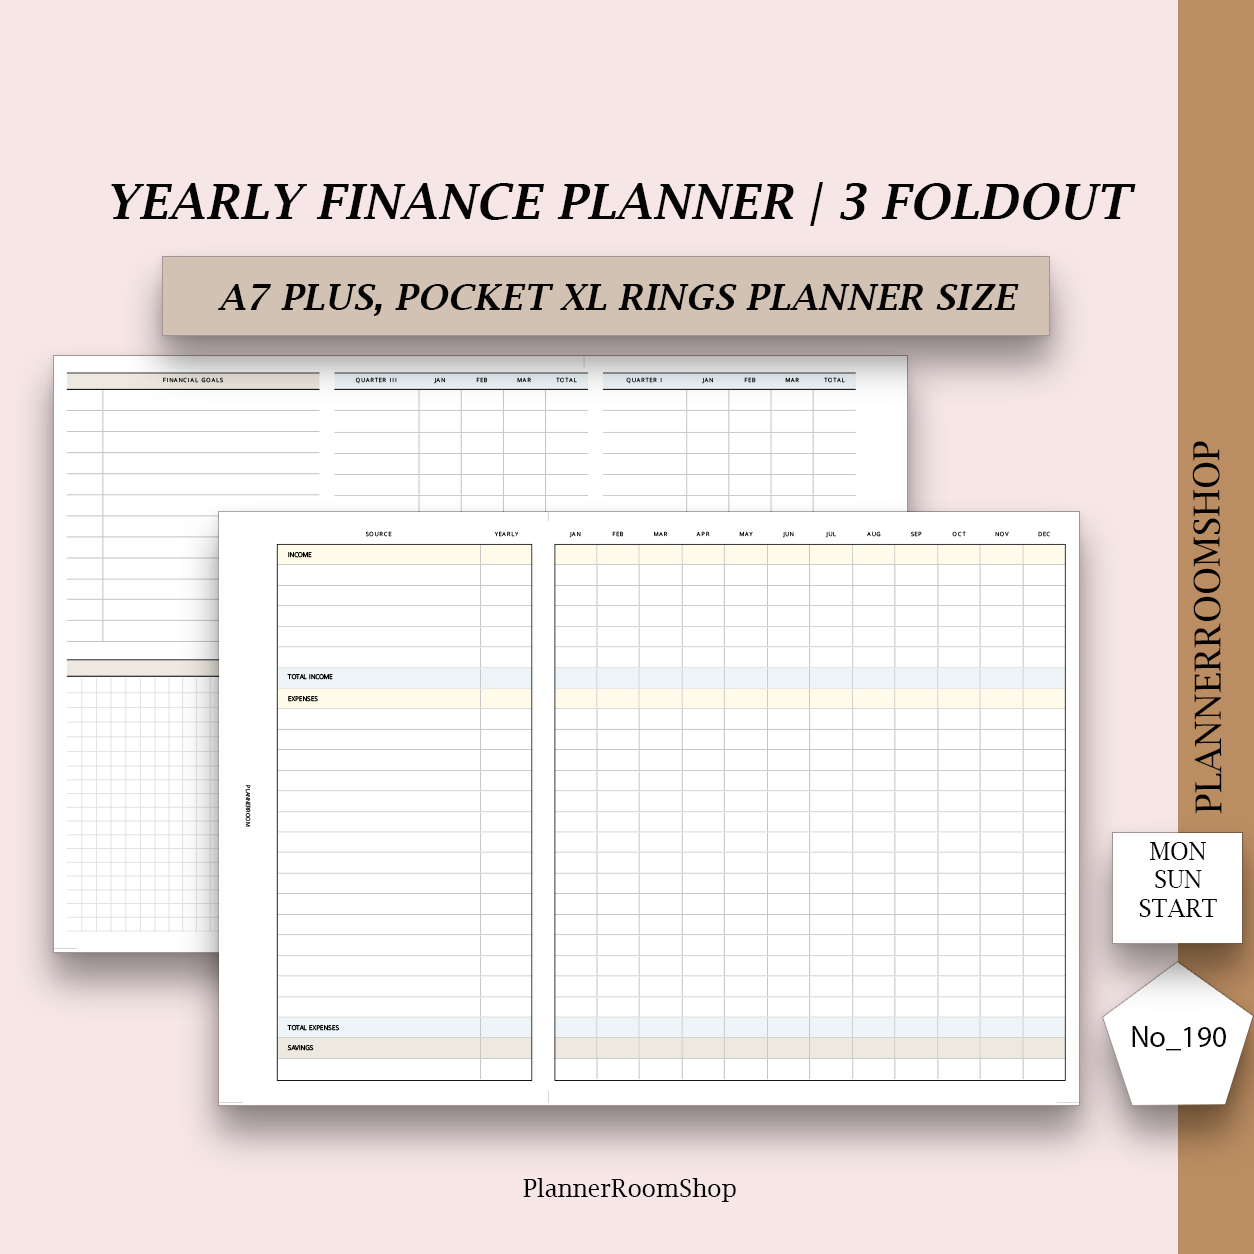 Finance Fold Out inserts - 190